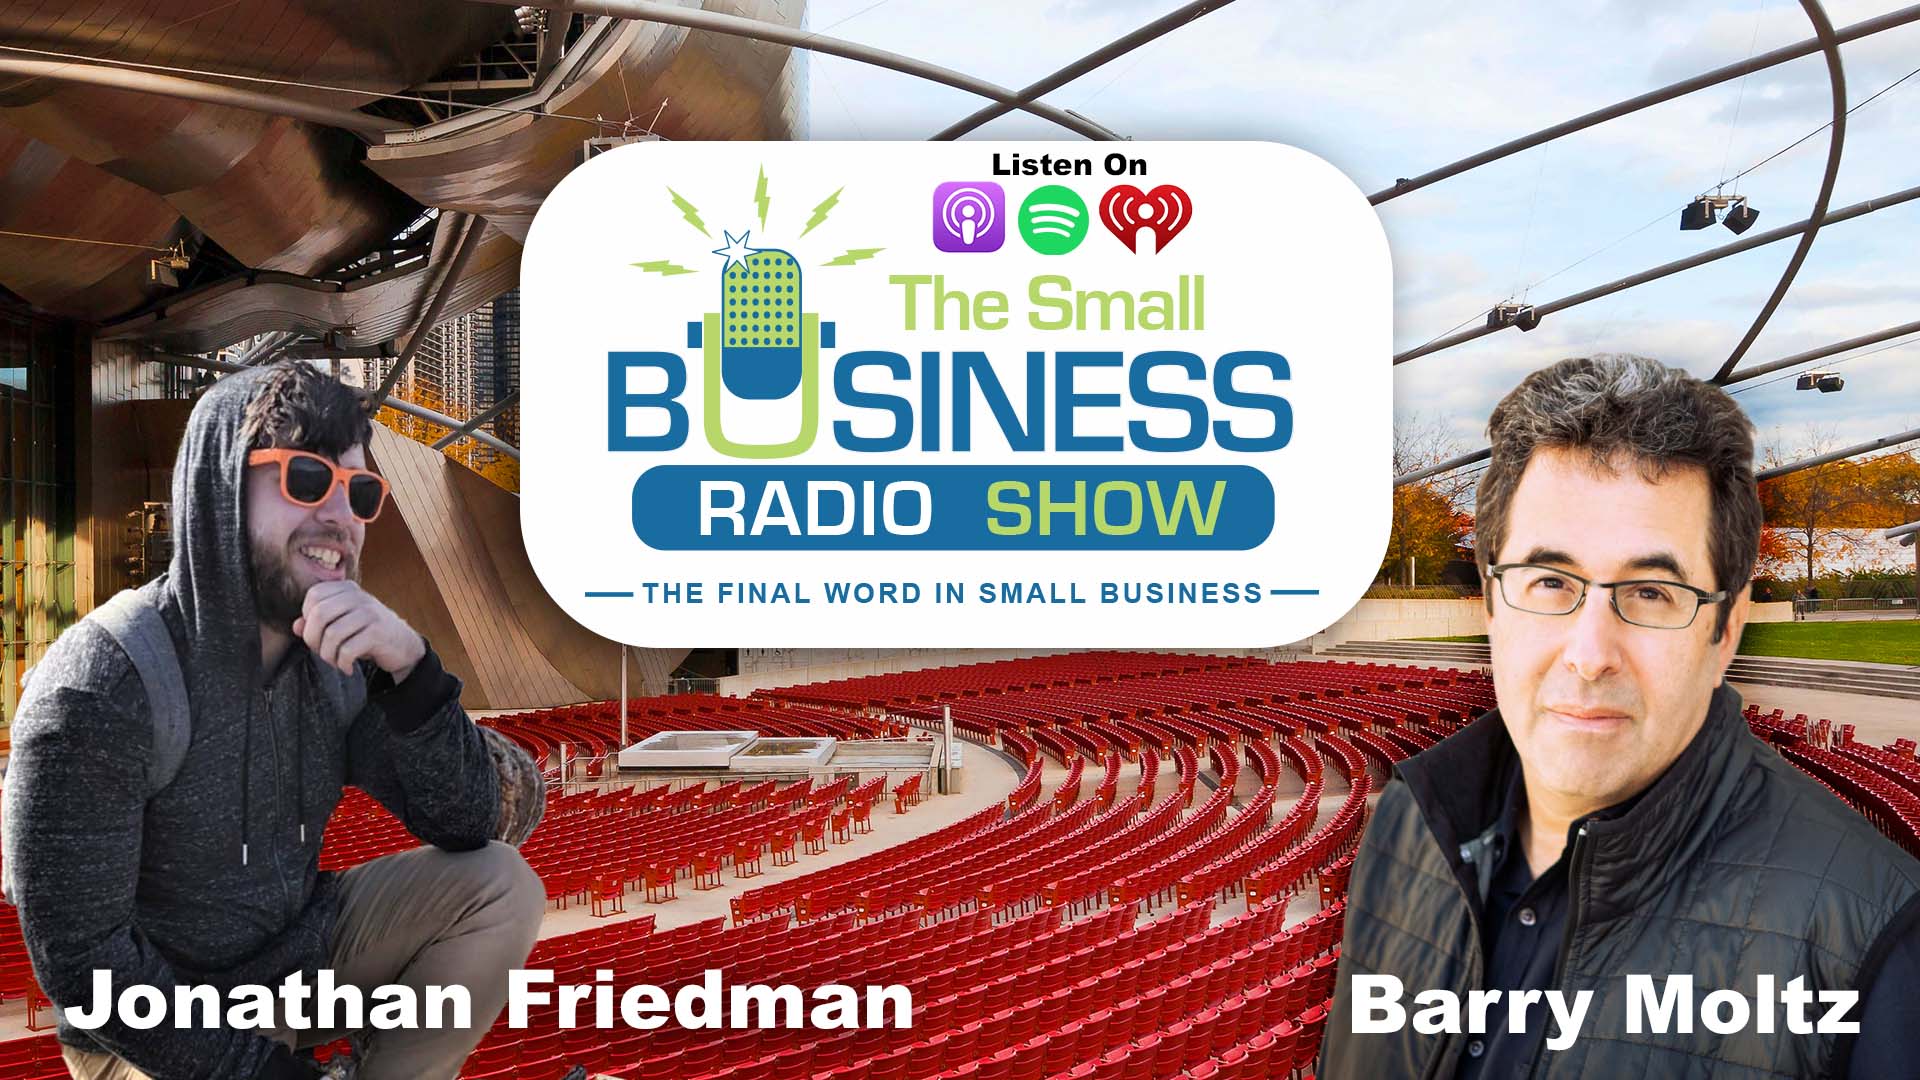 Jonathan Friedman on The Small Business Radio Show